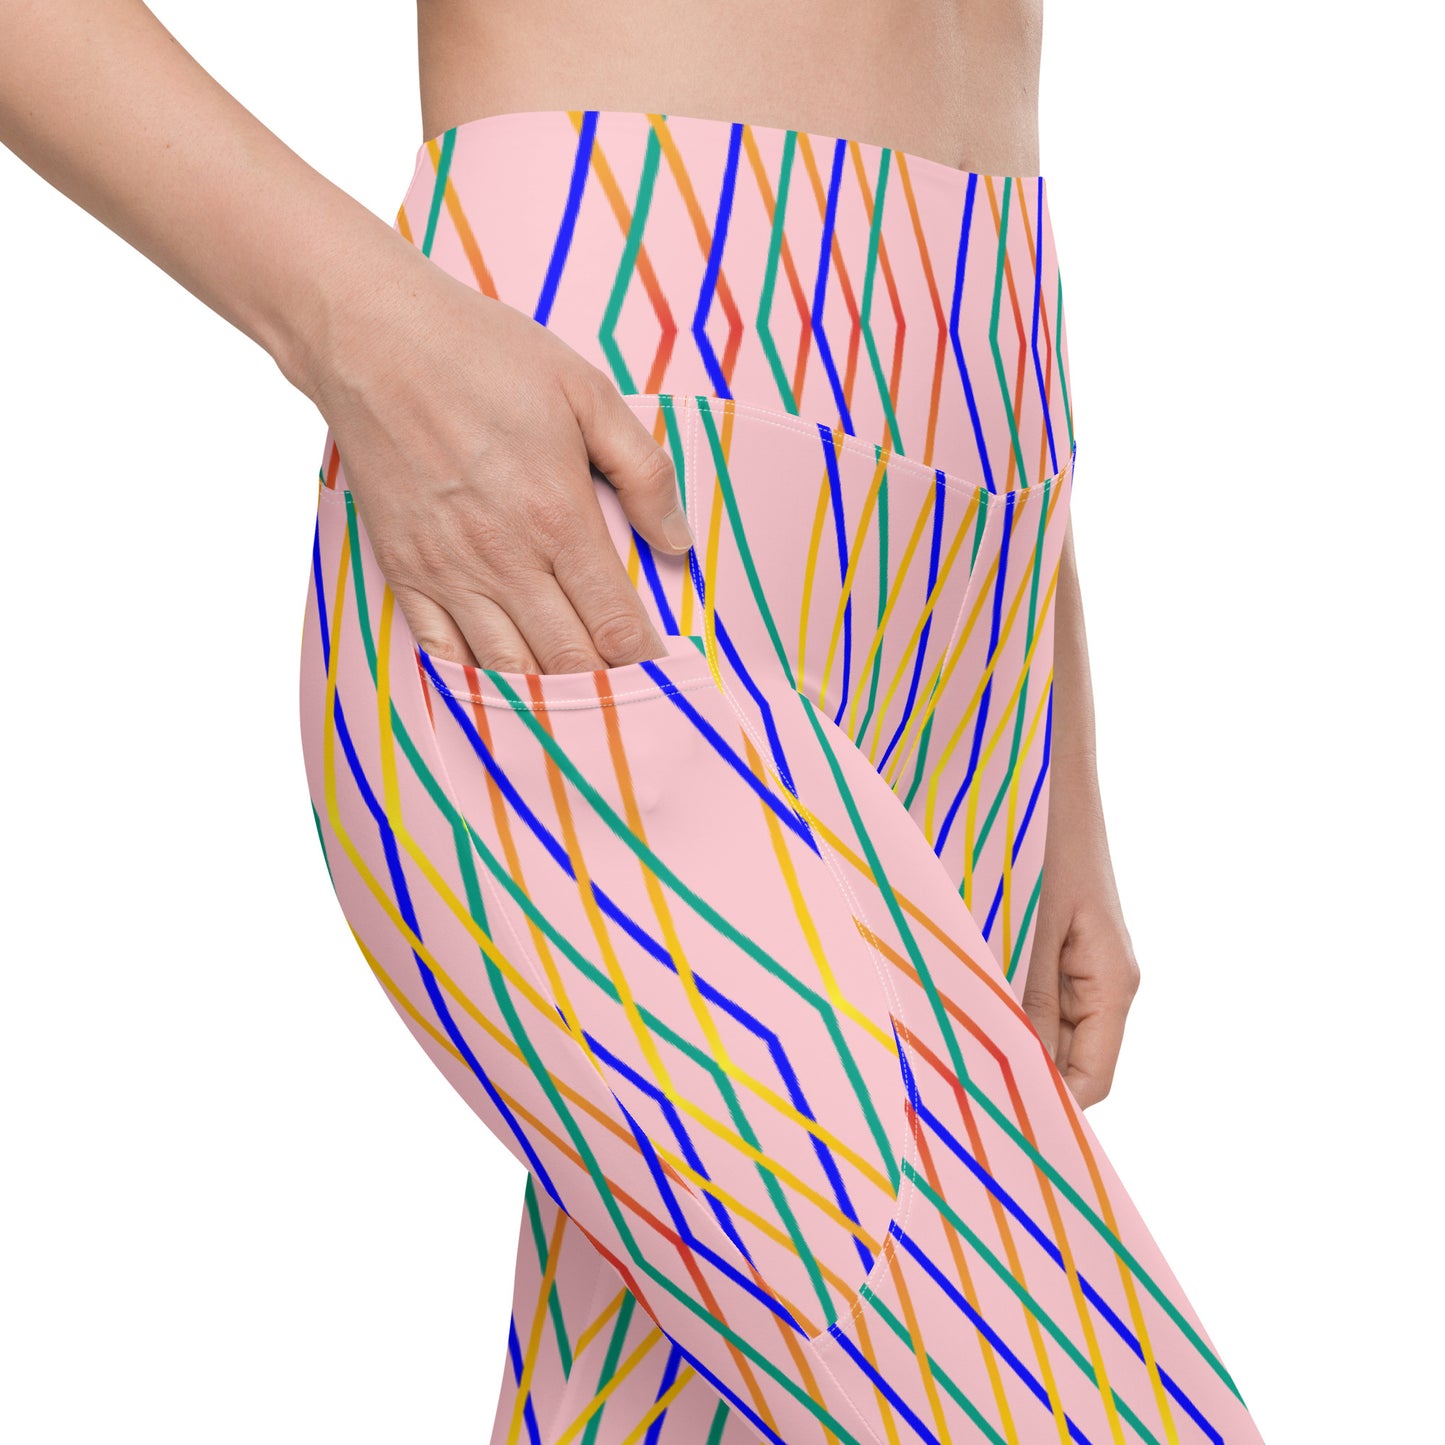 AfriBix Pink Constellation Print Leggings with pockets